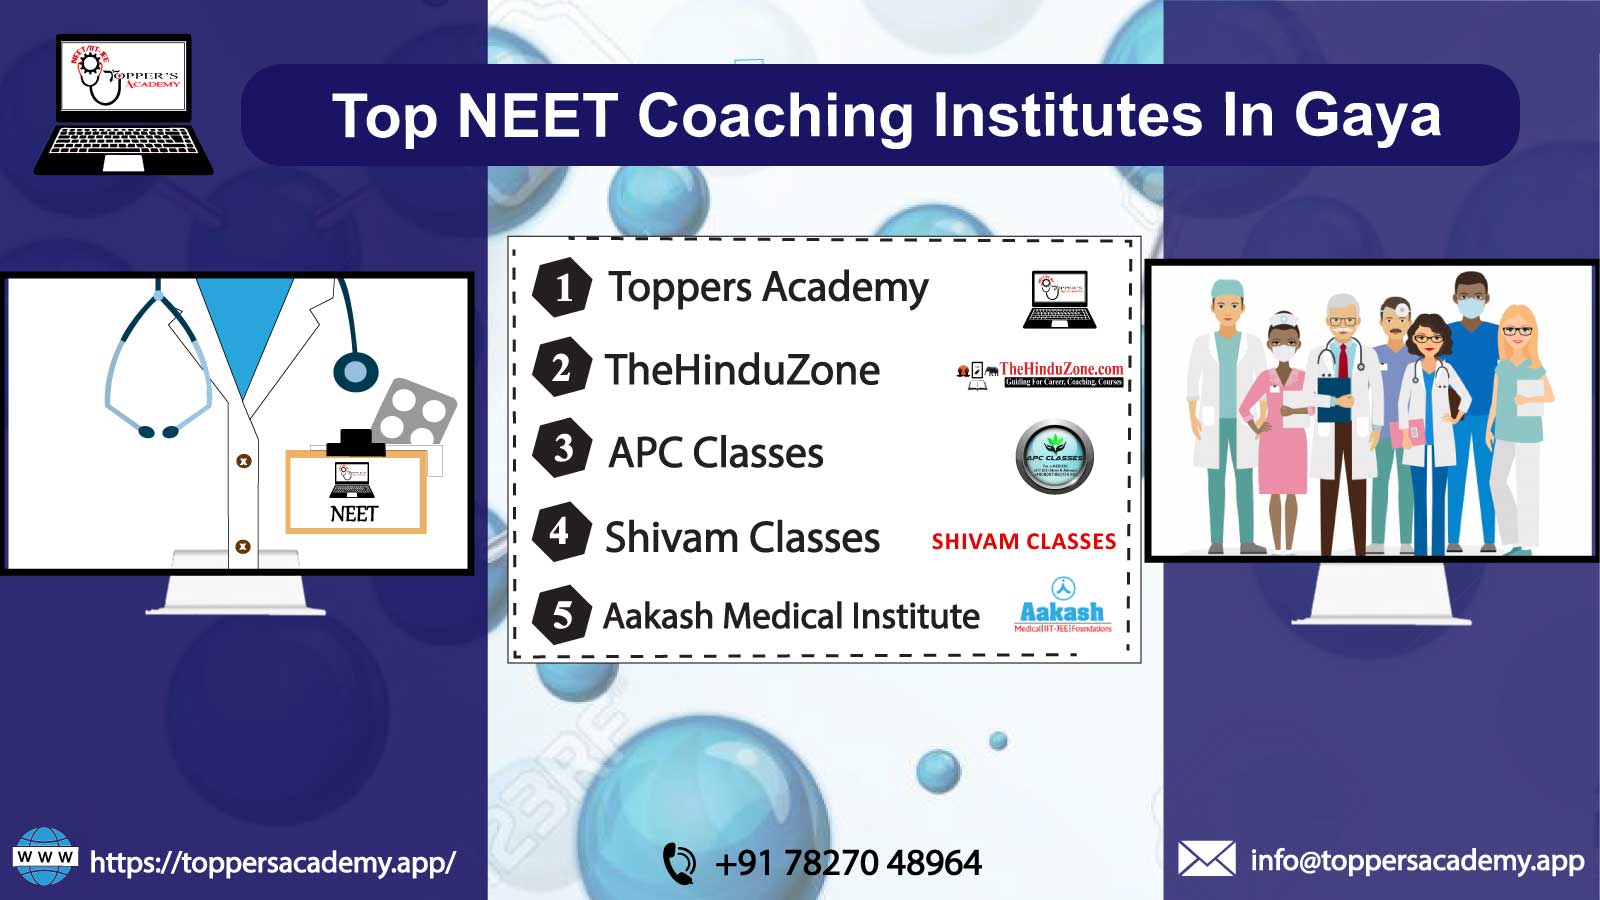 list of the top NEET Coaching in Gaya